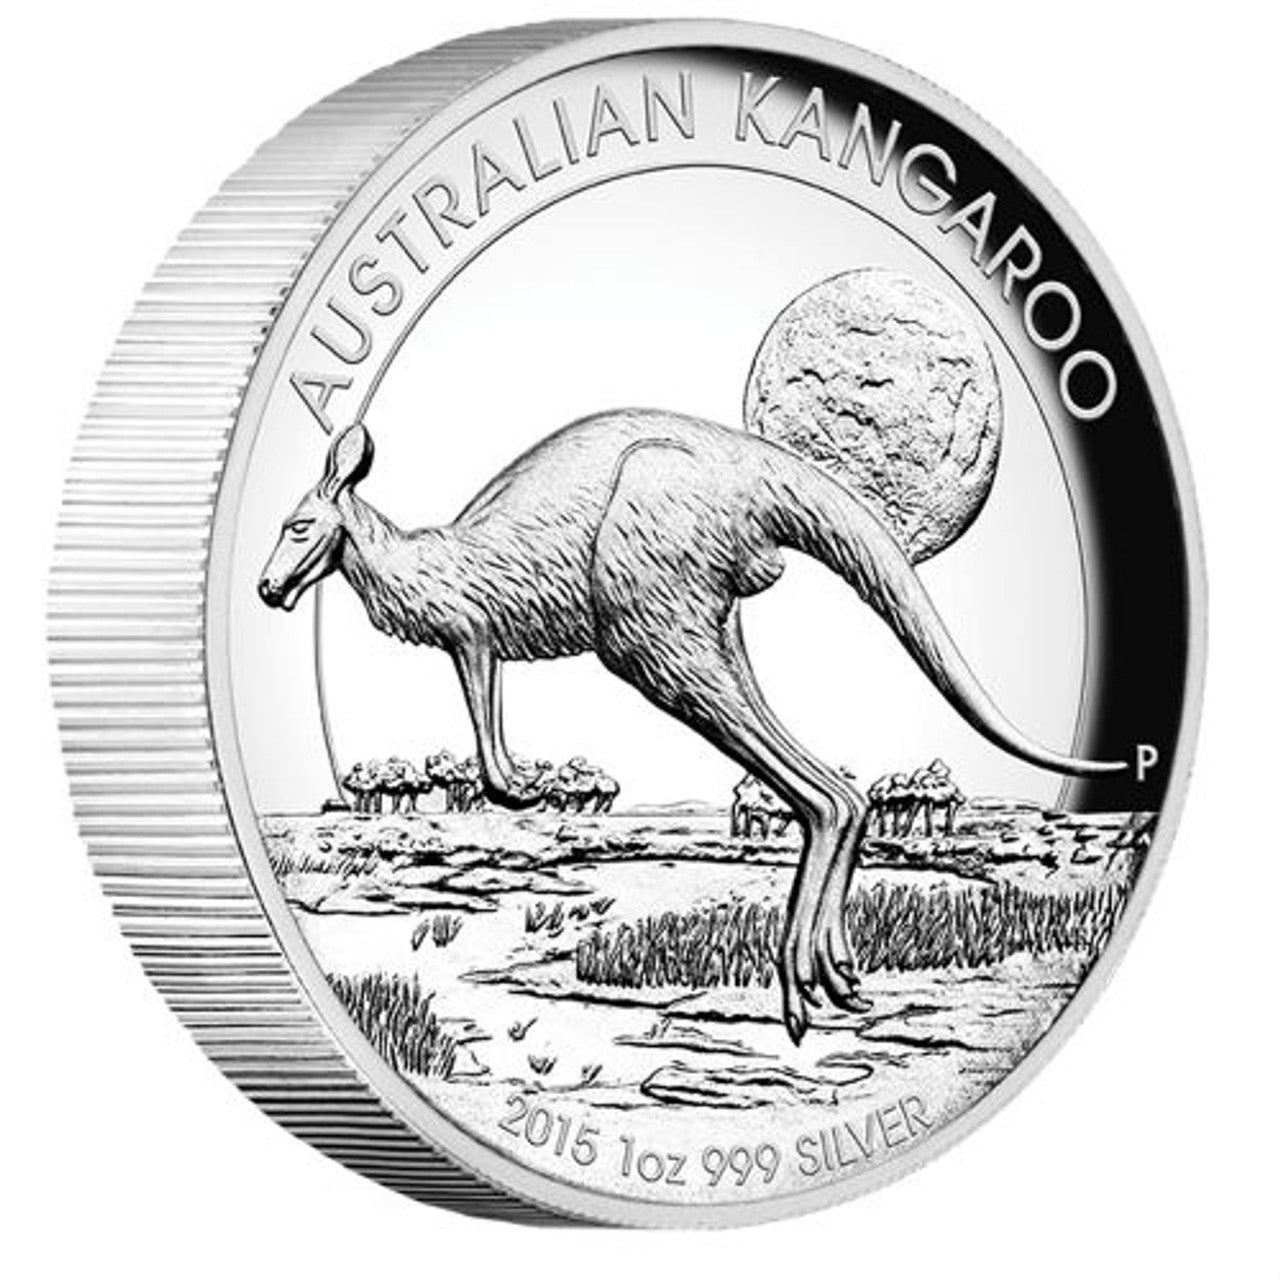 AUSTRALIAN KANGAROO 2015 1oz SILVER PROOF HIGH RELIEF COIN